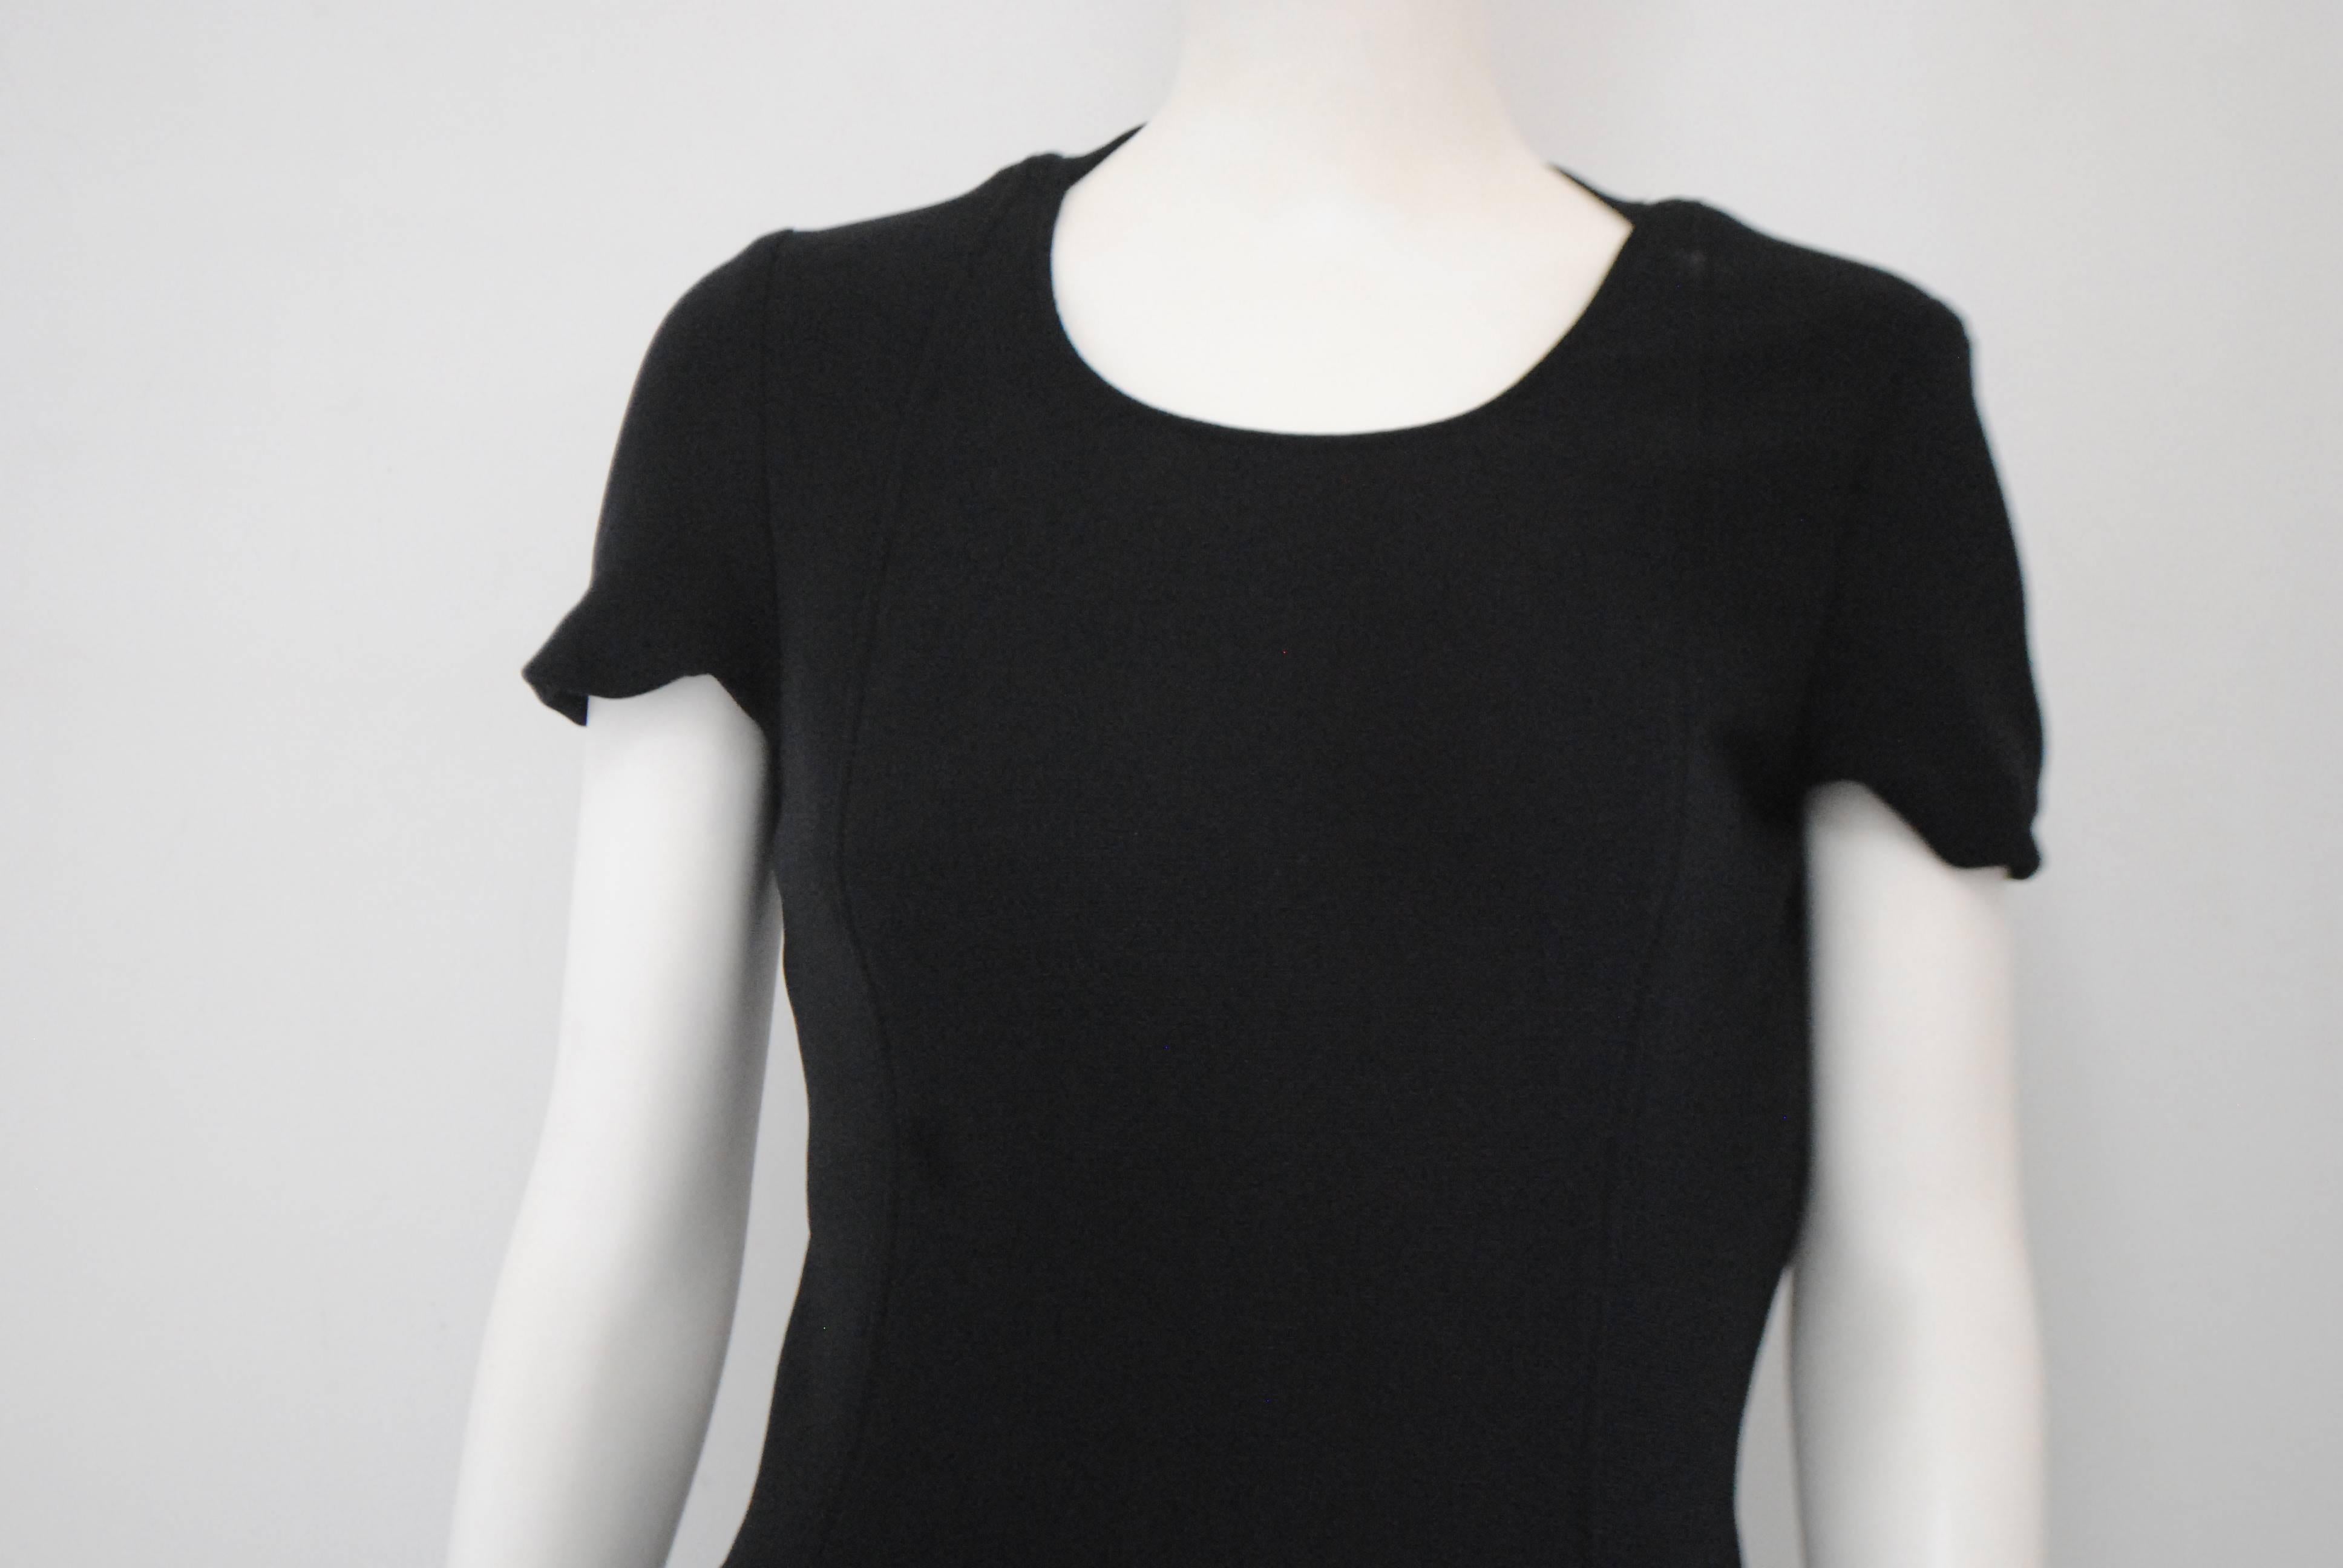 Gianfranco Ferré Black Dress For Sale 1